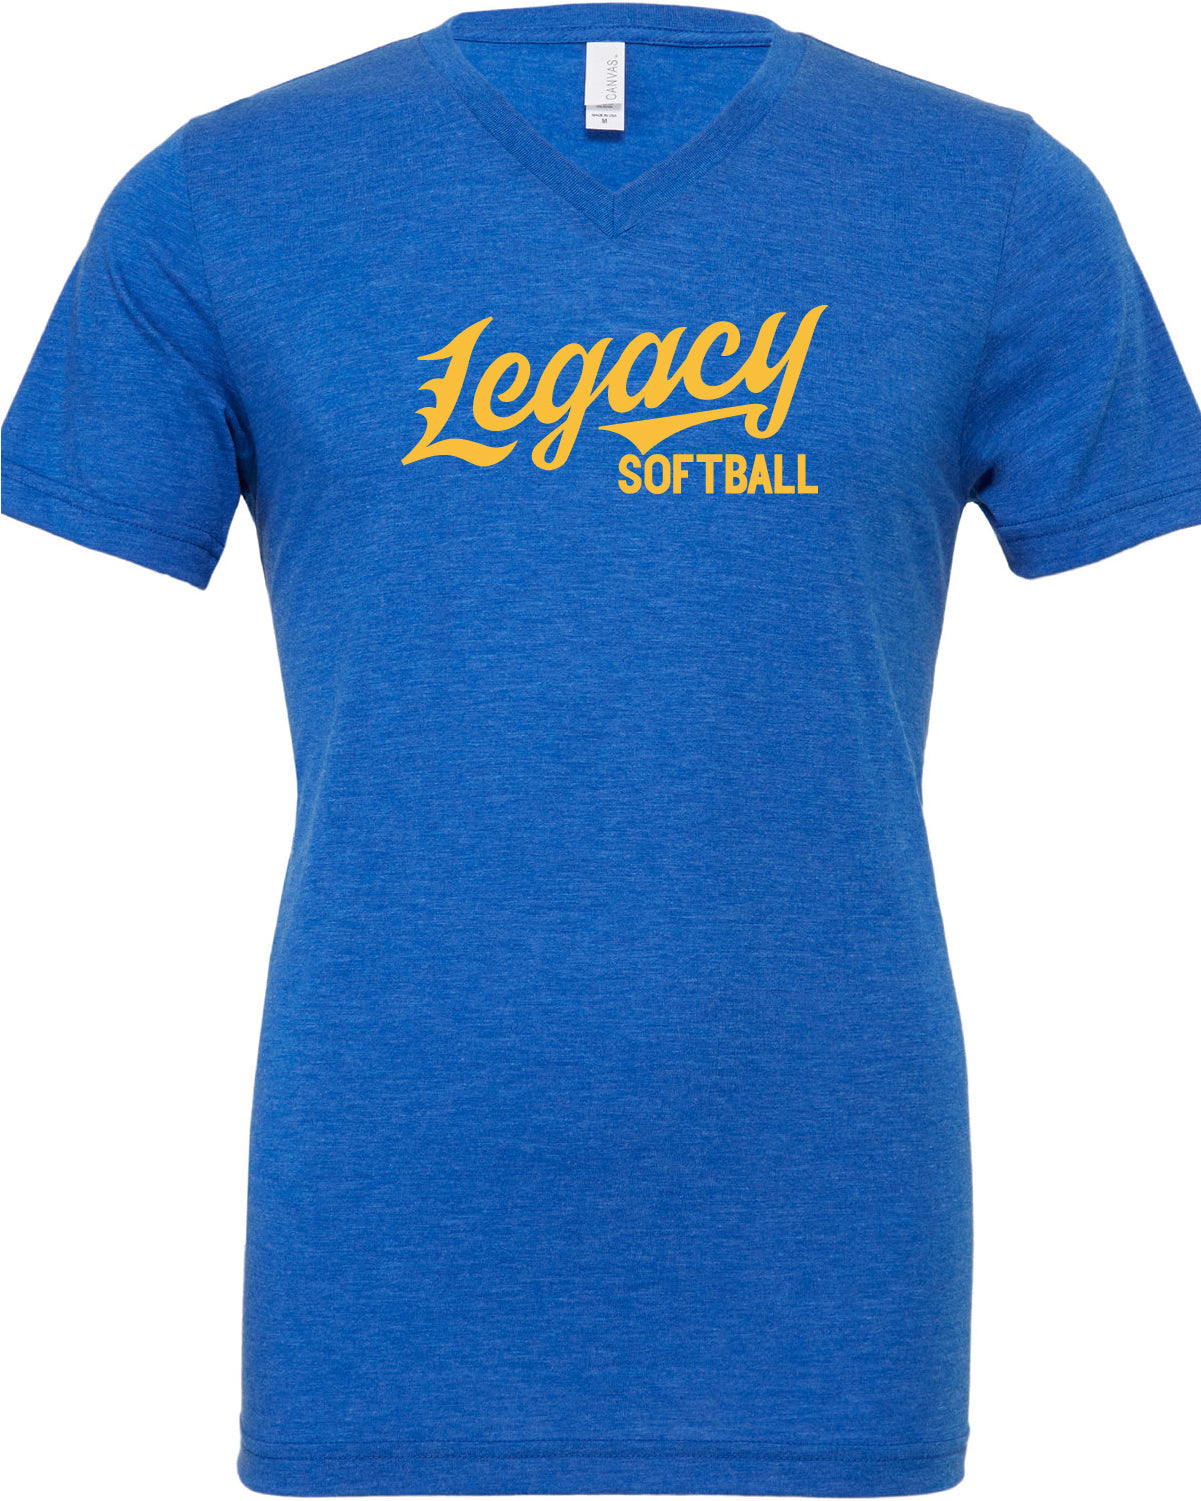 legacy softball tee